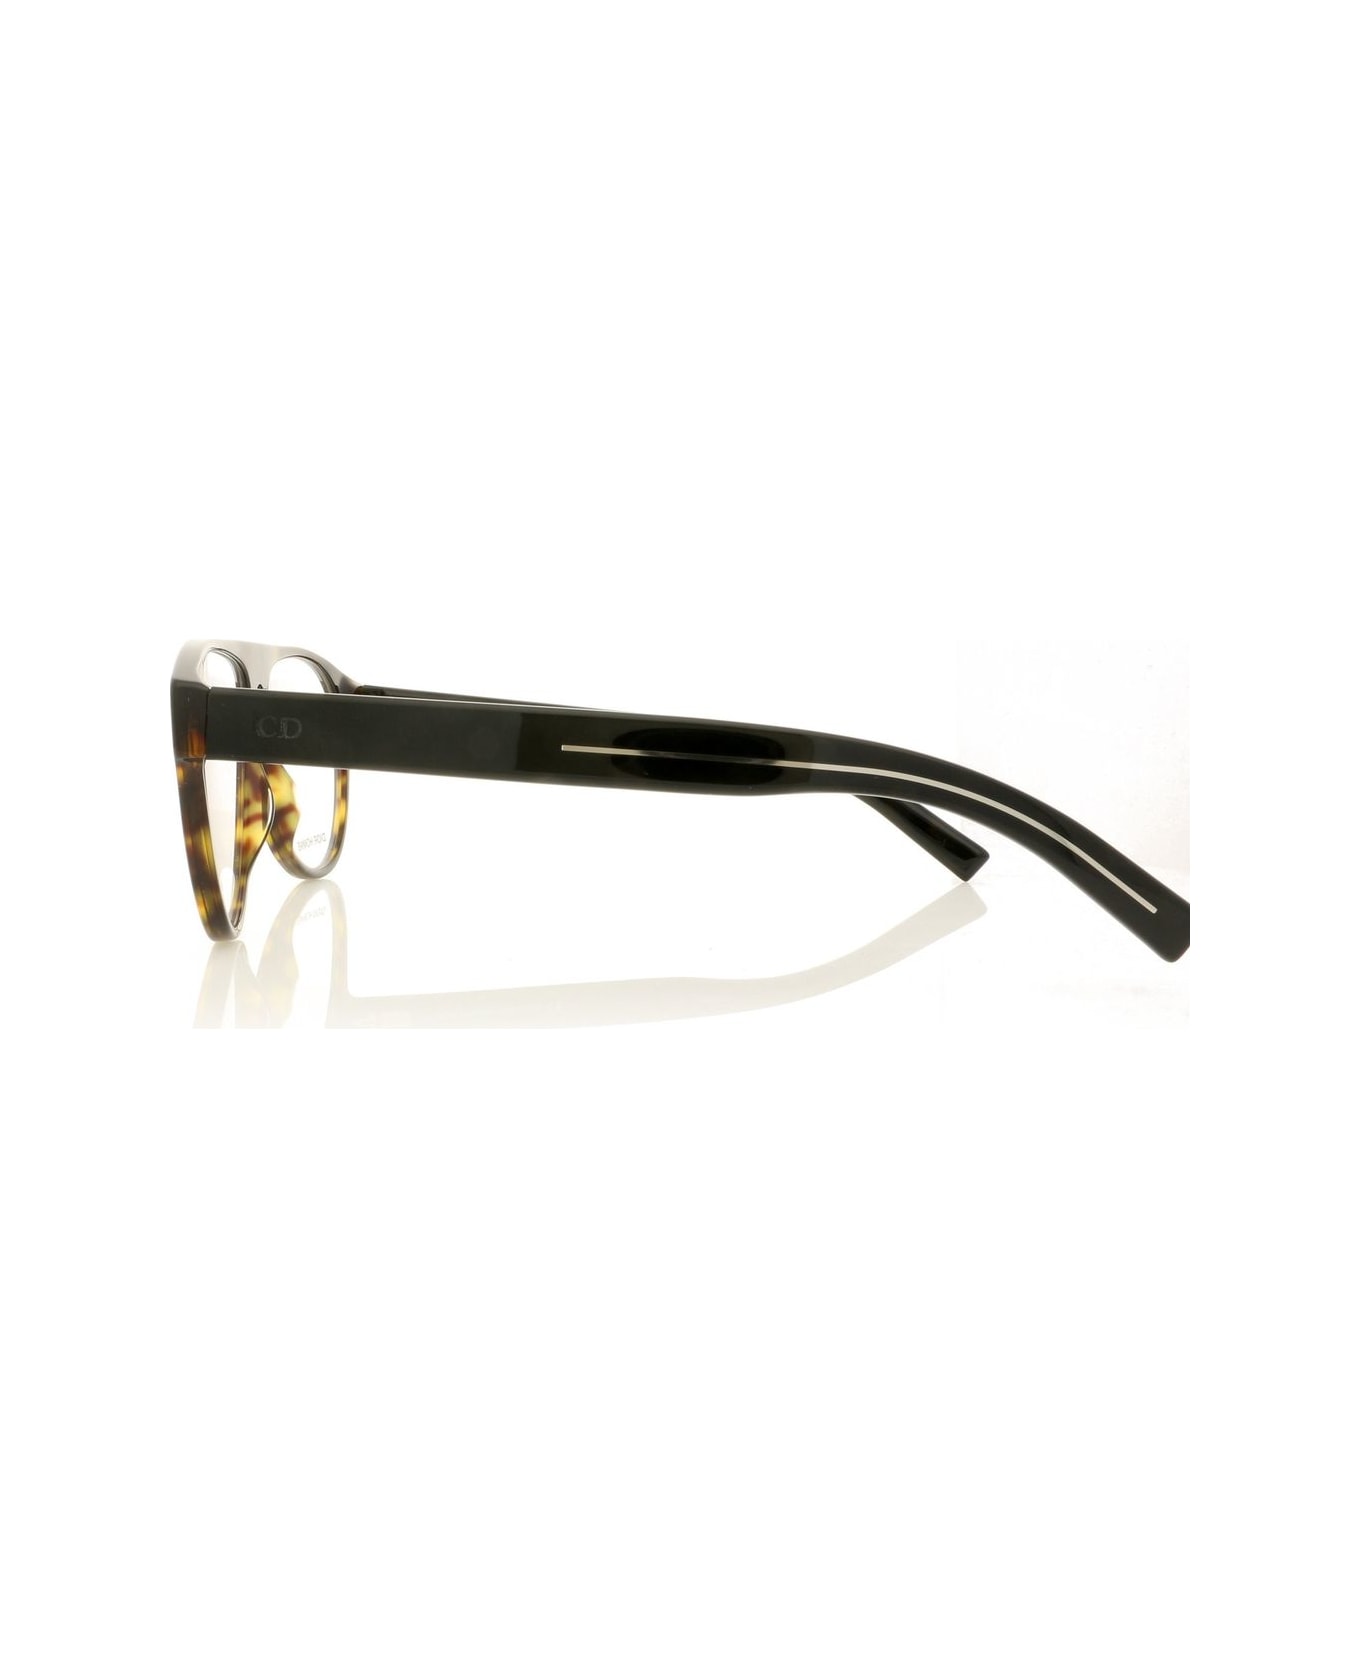 Dior Eyewear Blacktie 256 Glasses - Marrone